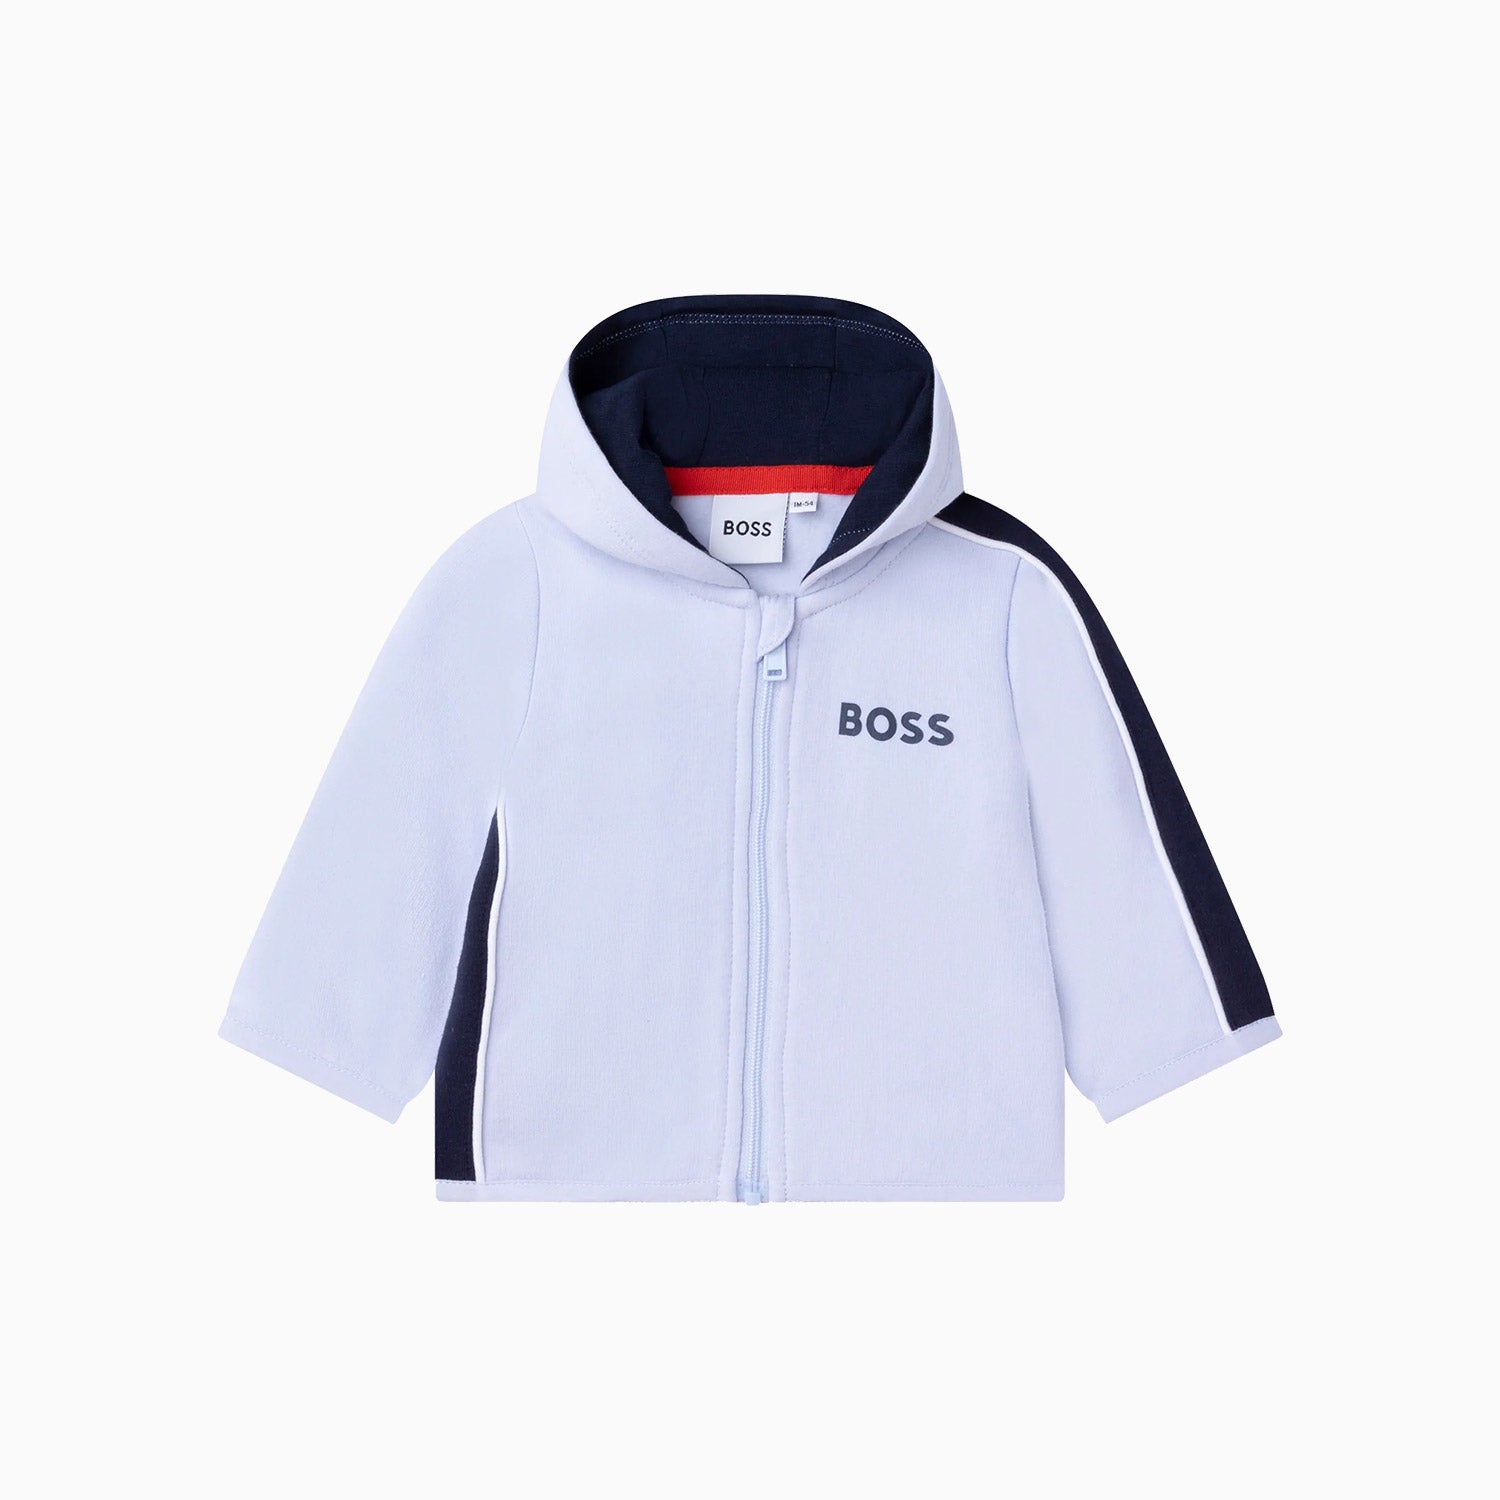 Hugo Boss Kid's Logo Printed Tracksuit Infants - Color: Pale Blue - Kids Premium Clothing -